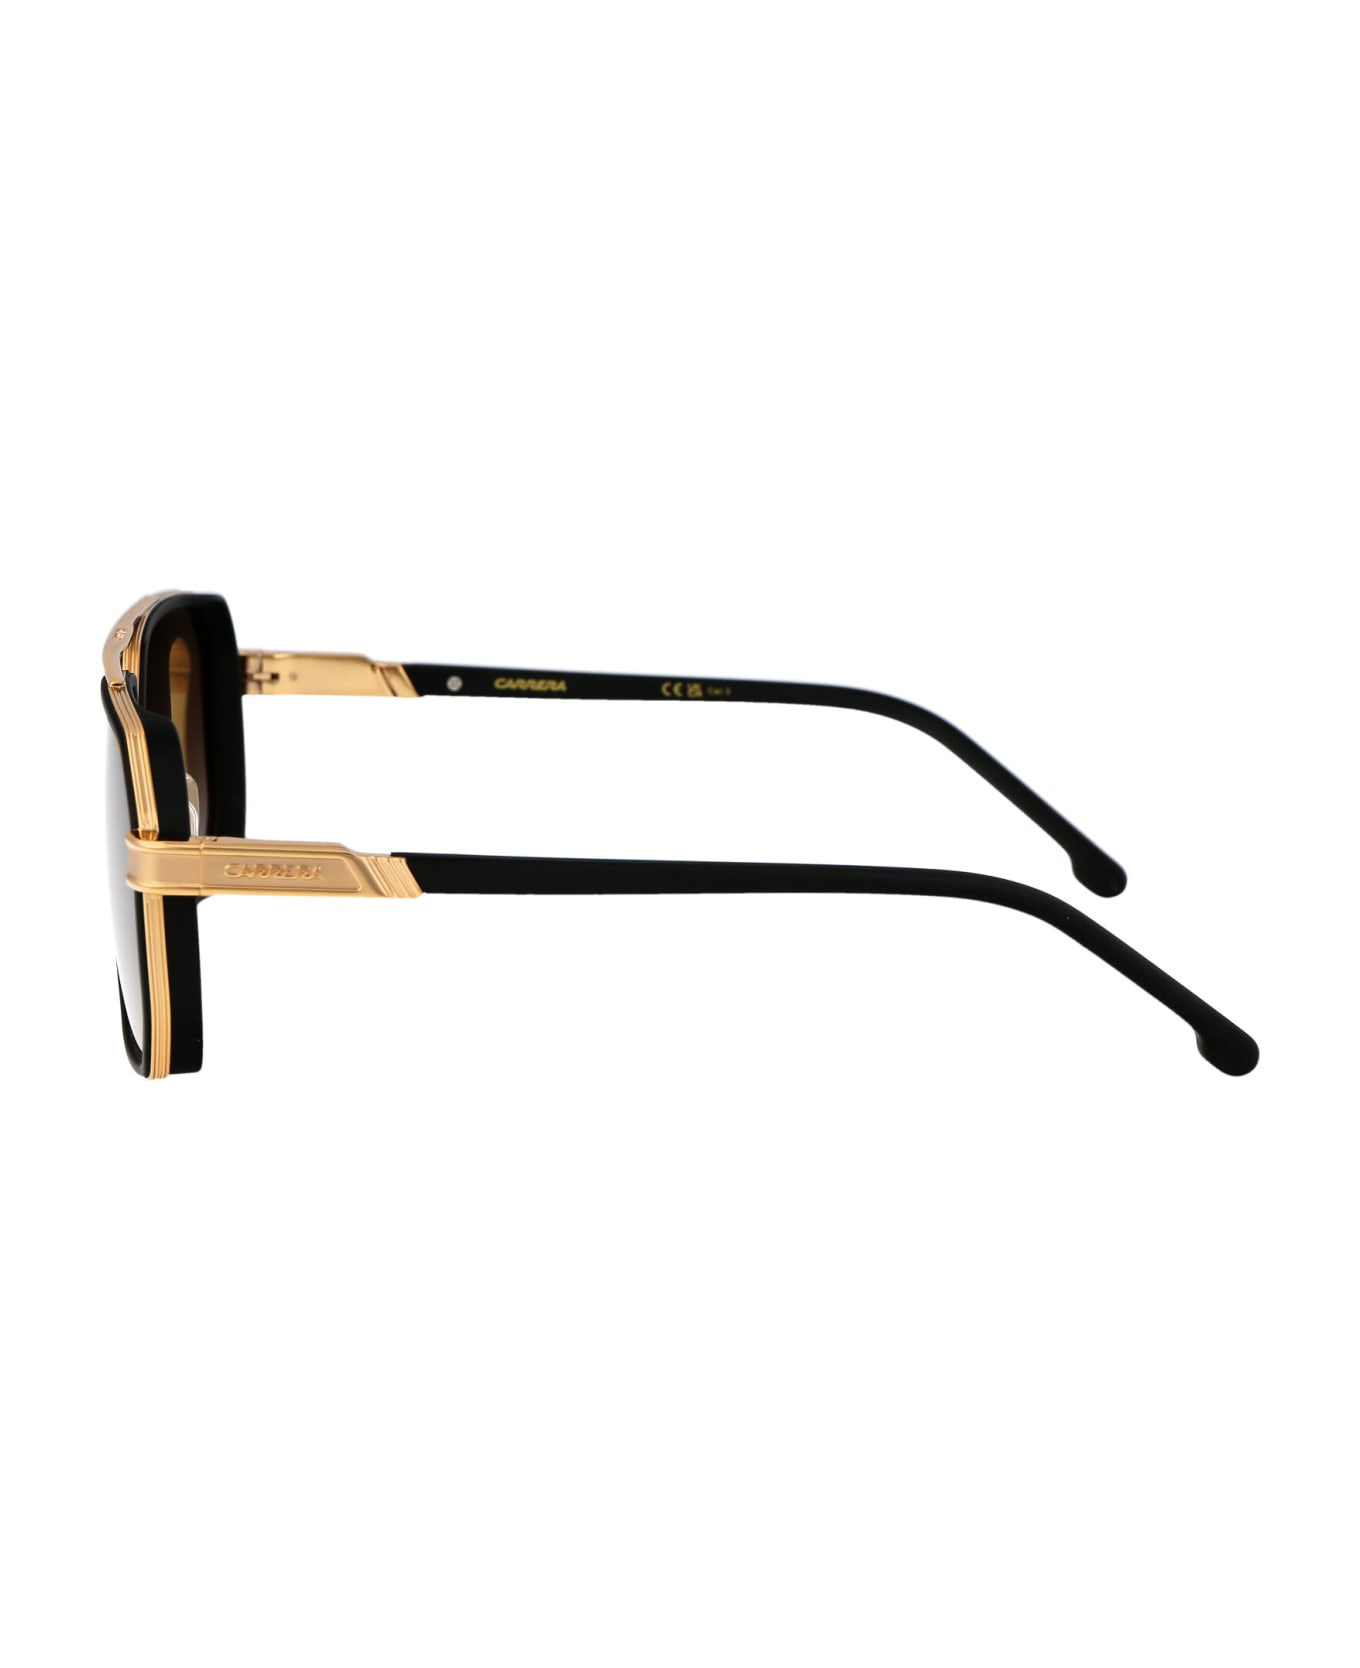 Carrera 1069/s Sunglasses - I4686 MT BK GD